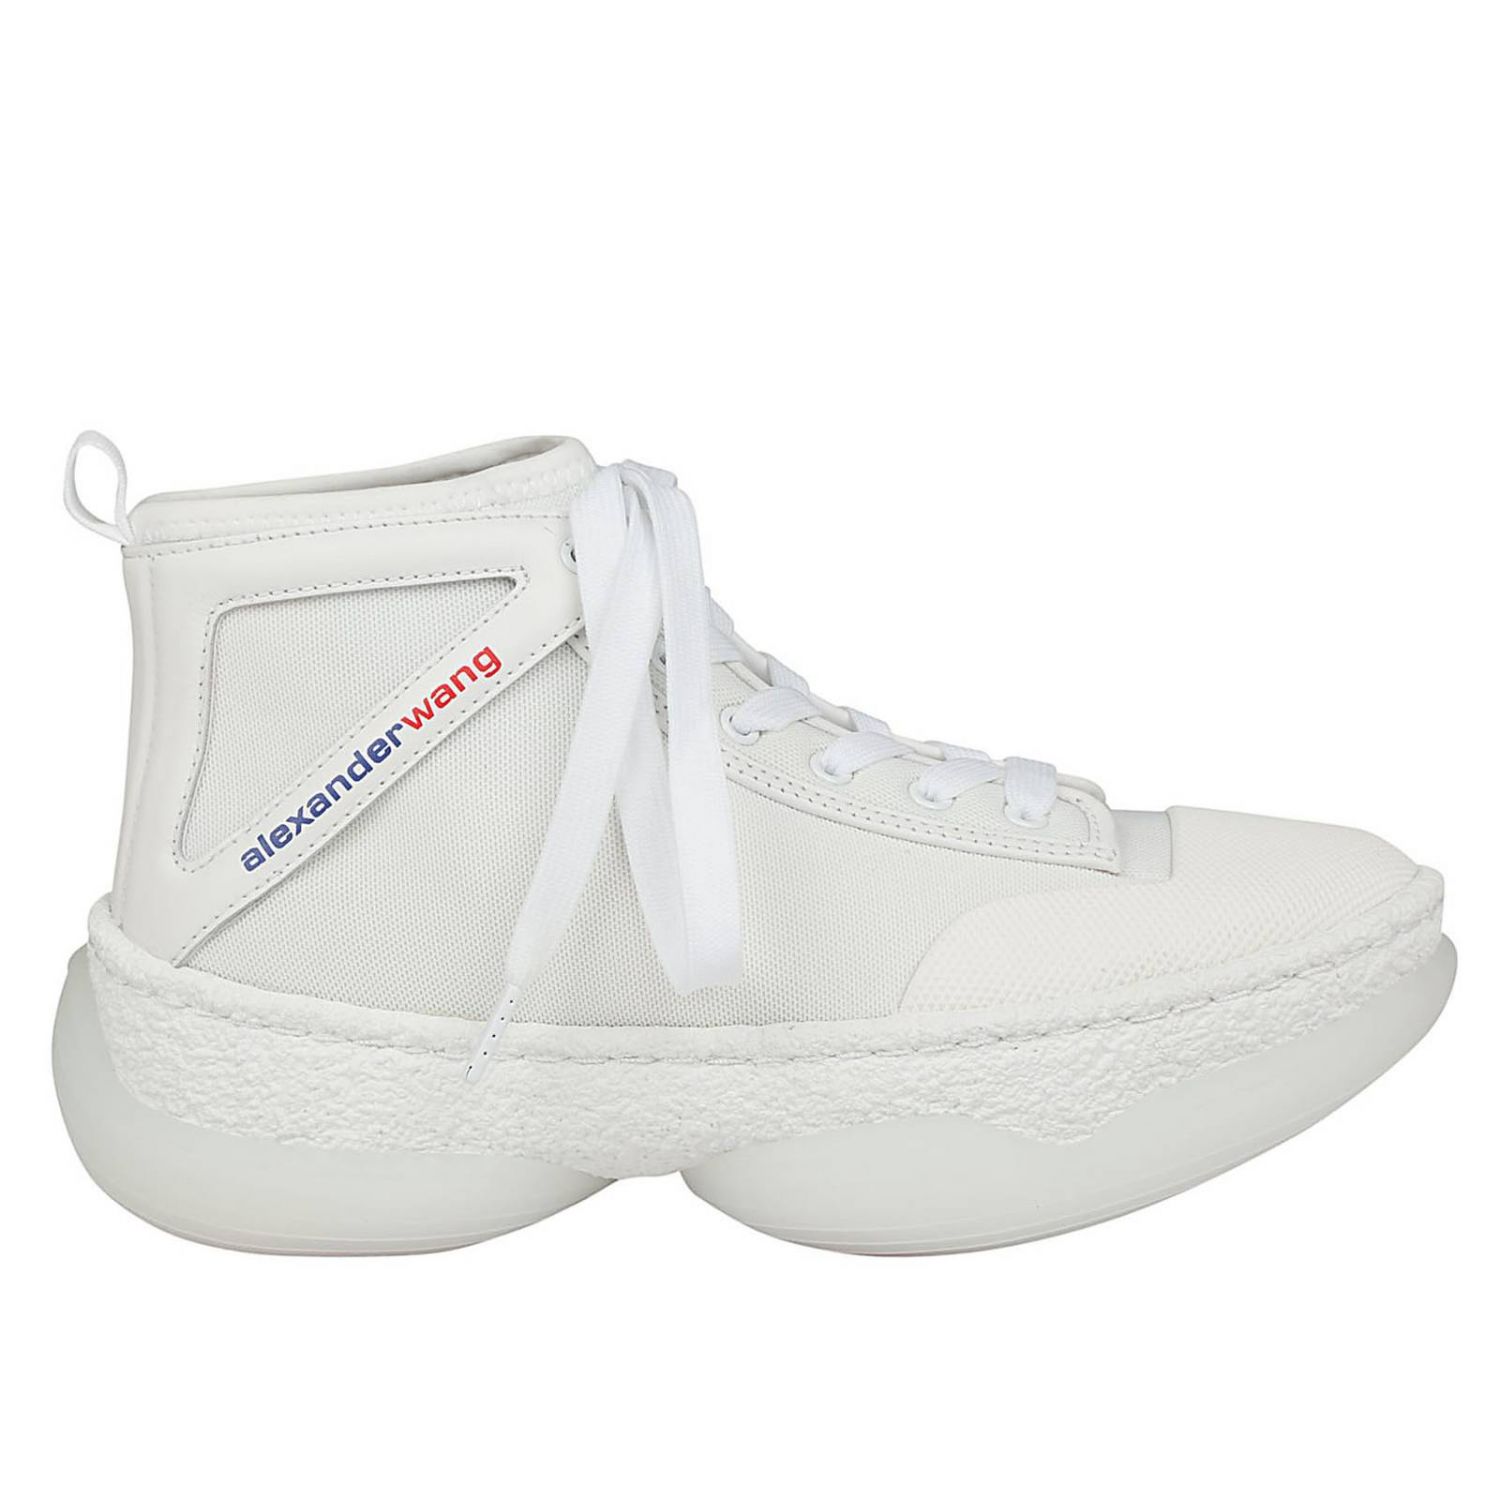 white alexander wang shoes